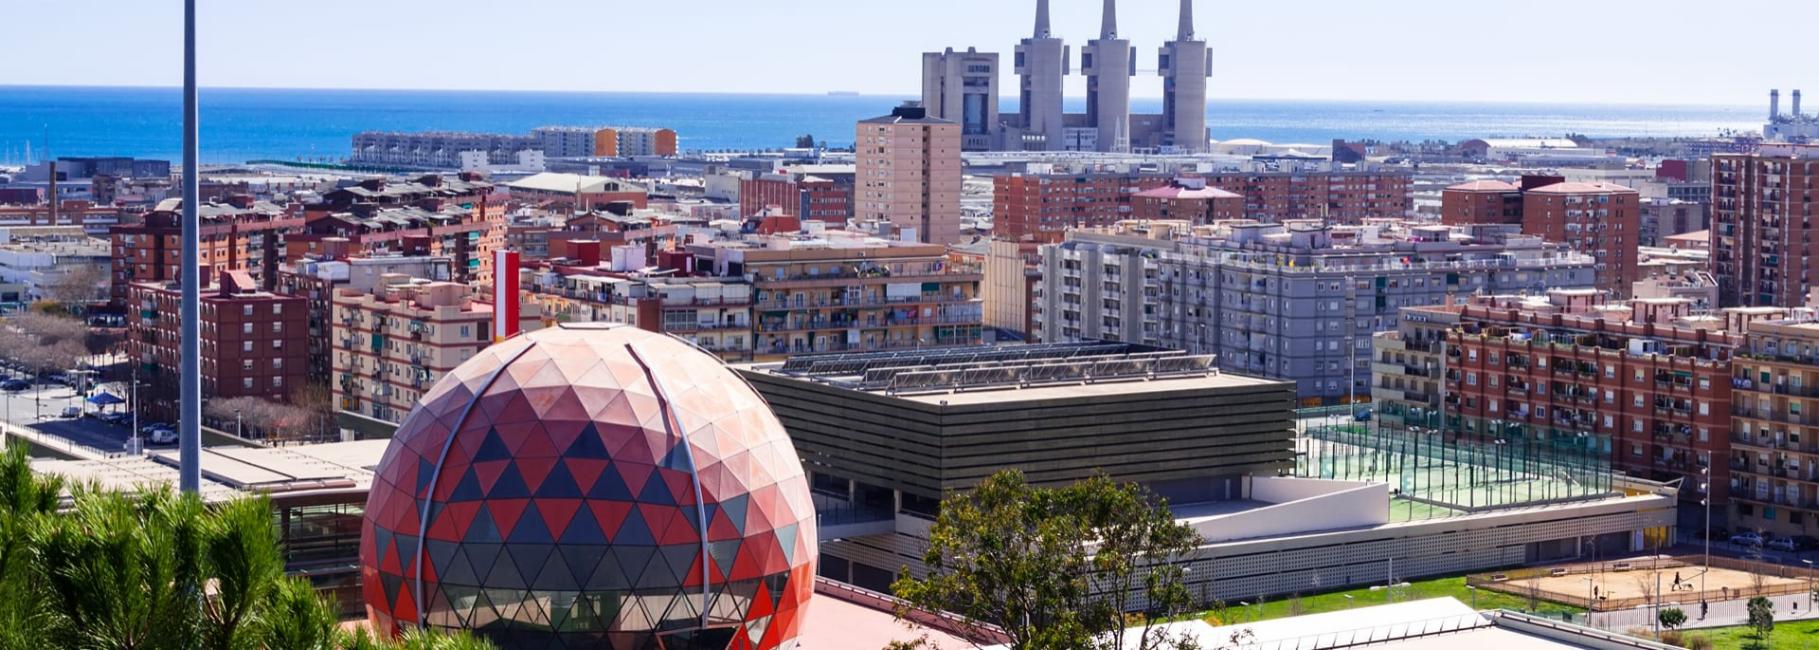 barcelona business trip header slk fe